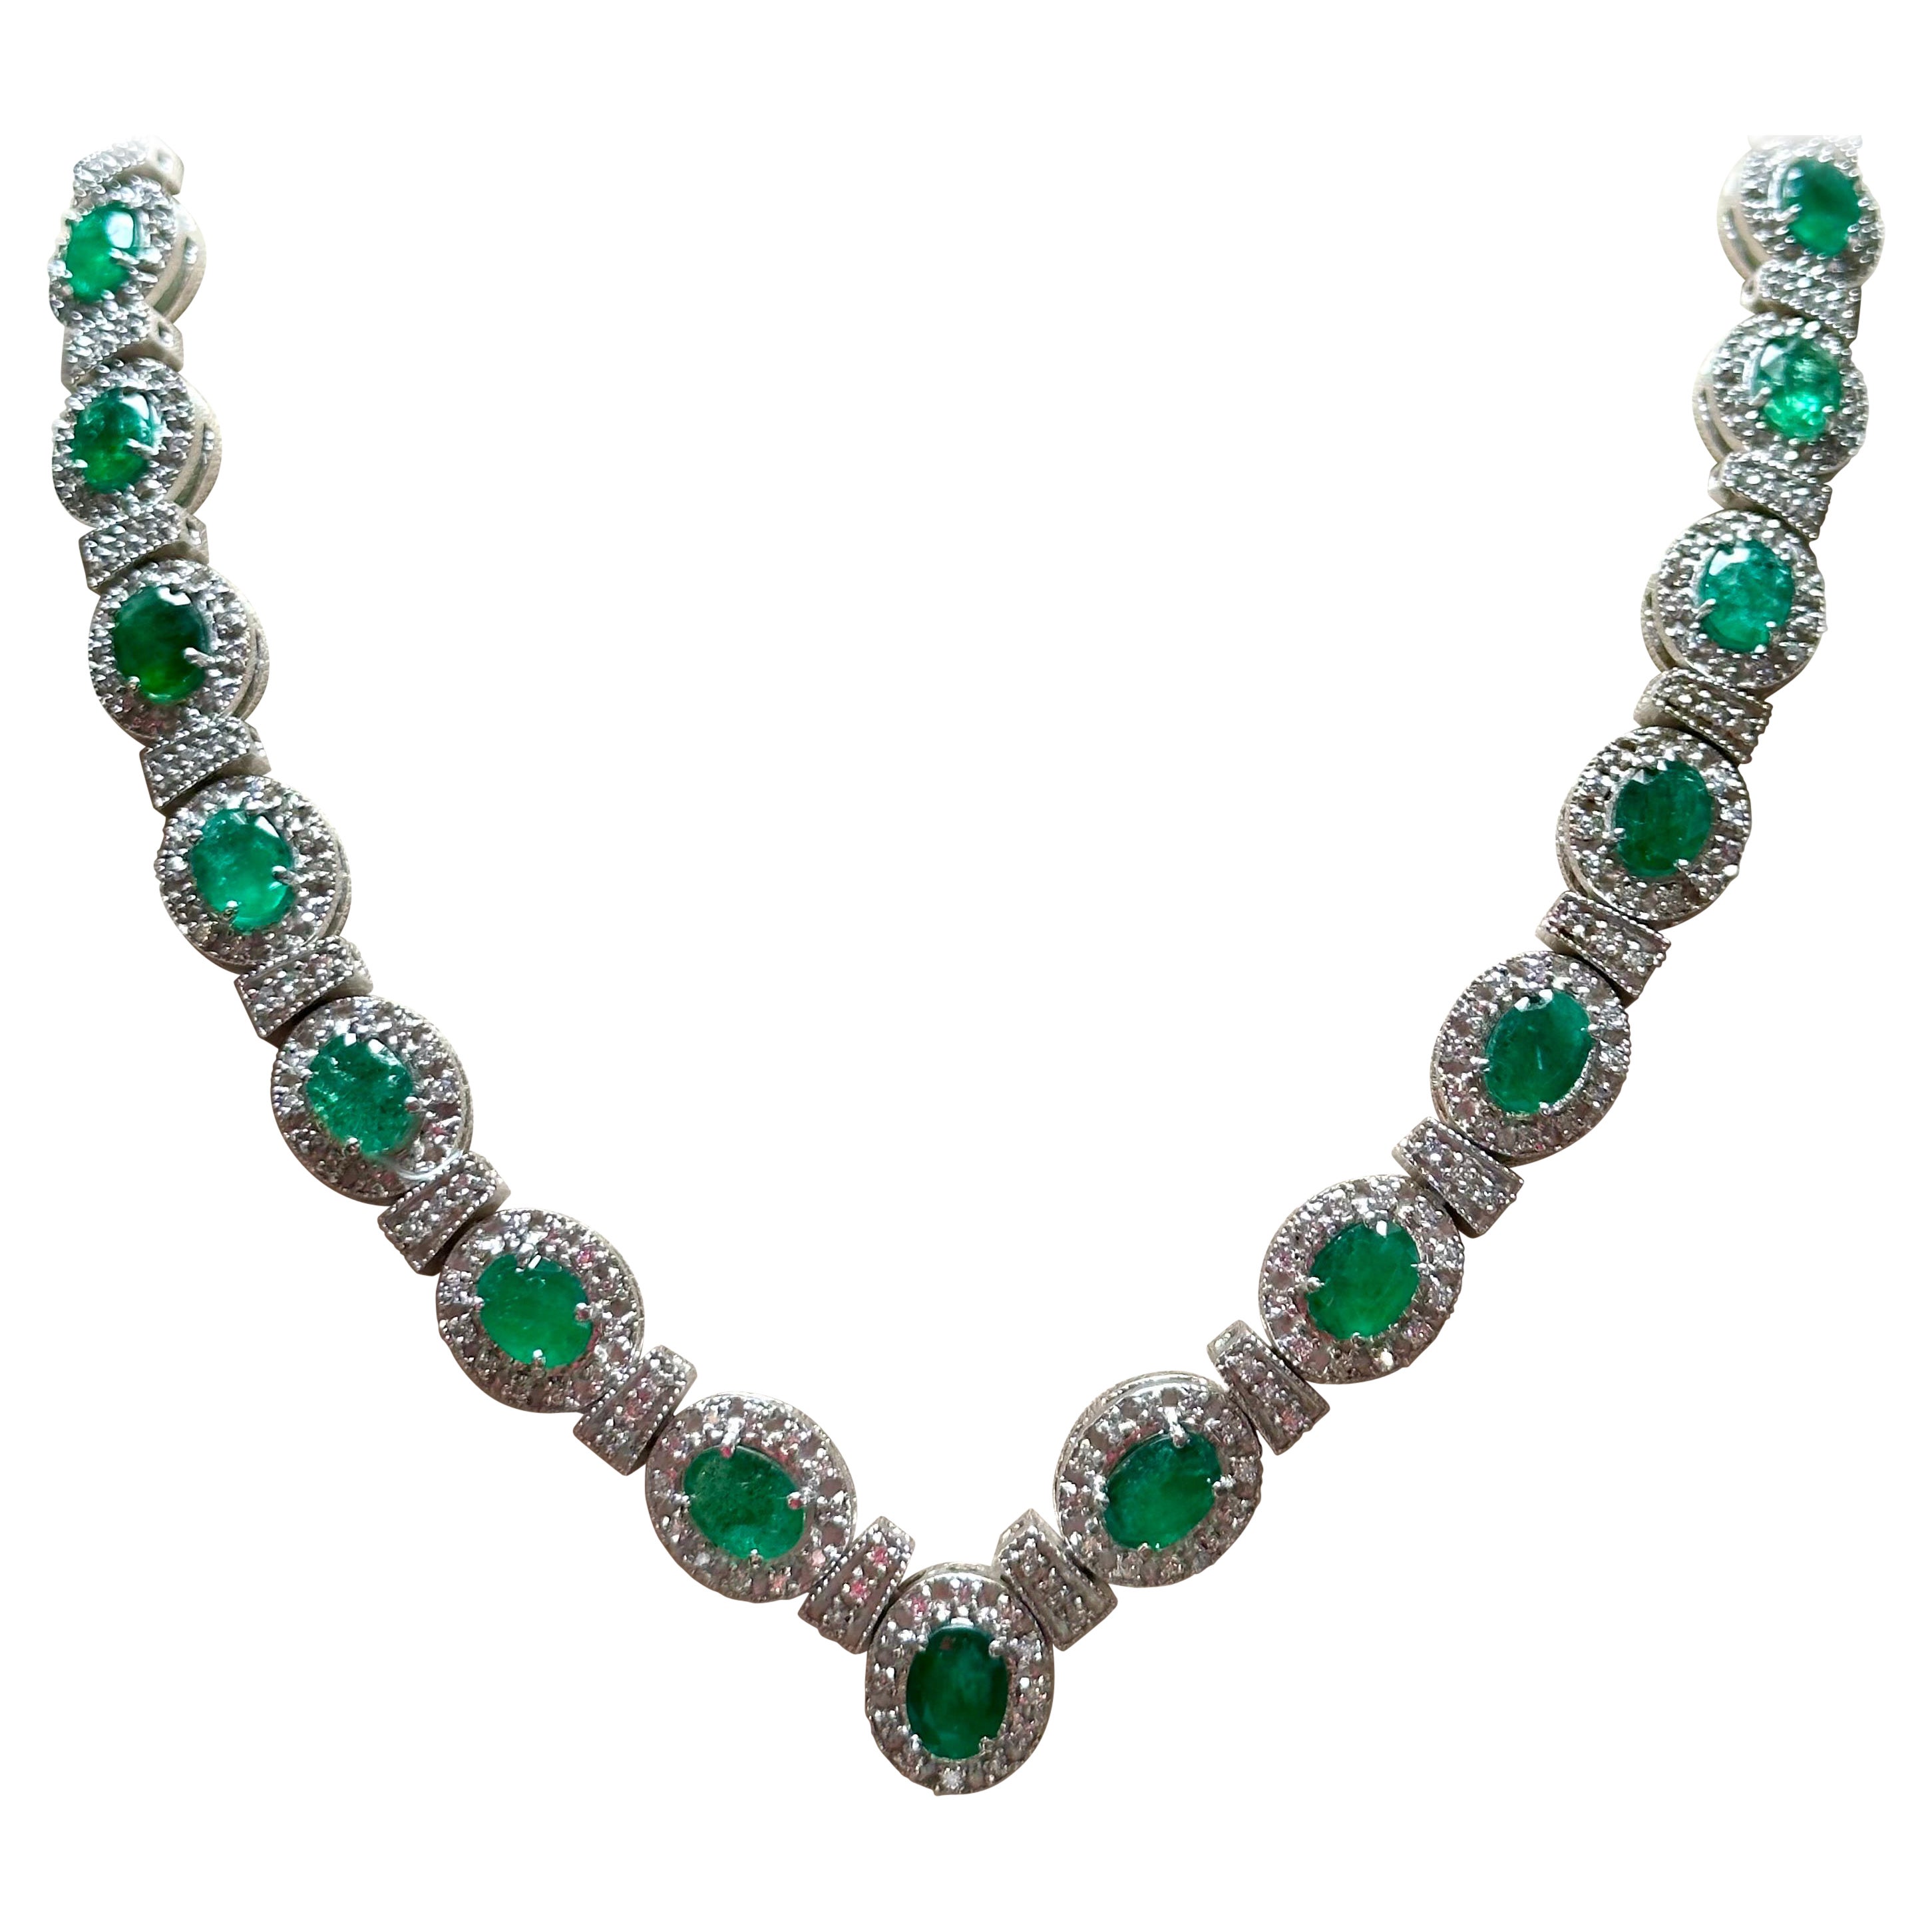 28 Carat Oval Shape Natural Emerald & 5 Carat Diamond Necklace in 14 Karat Gold